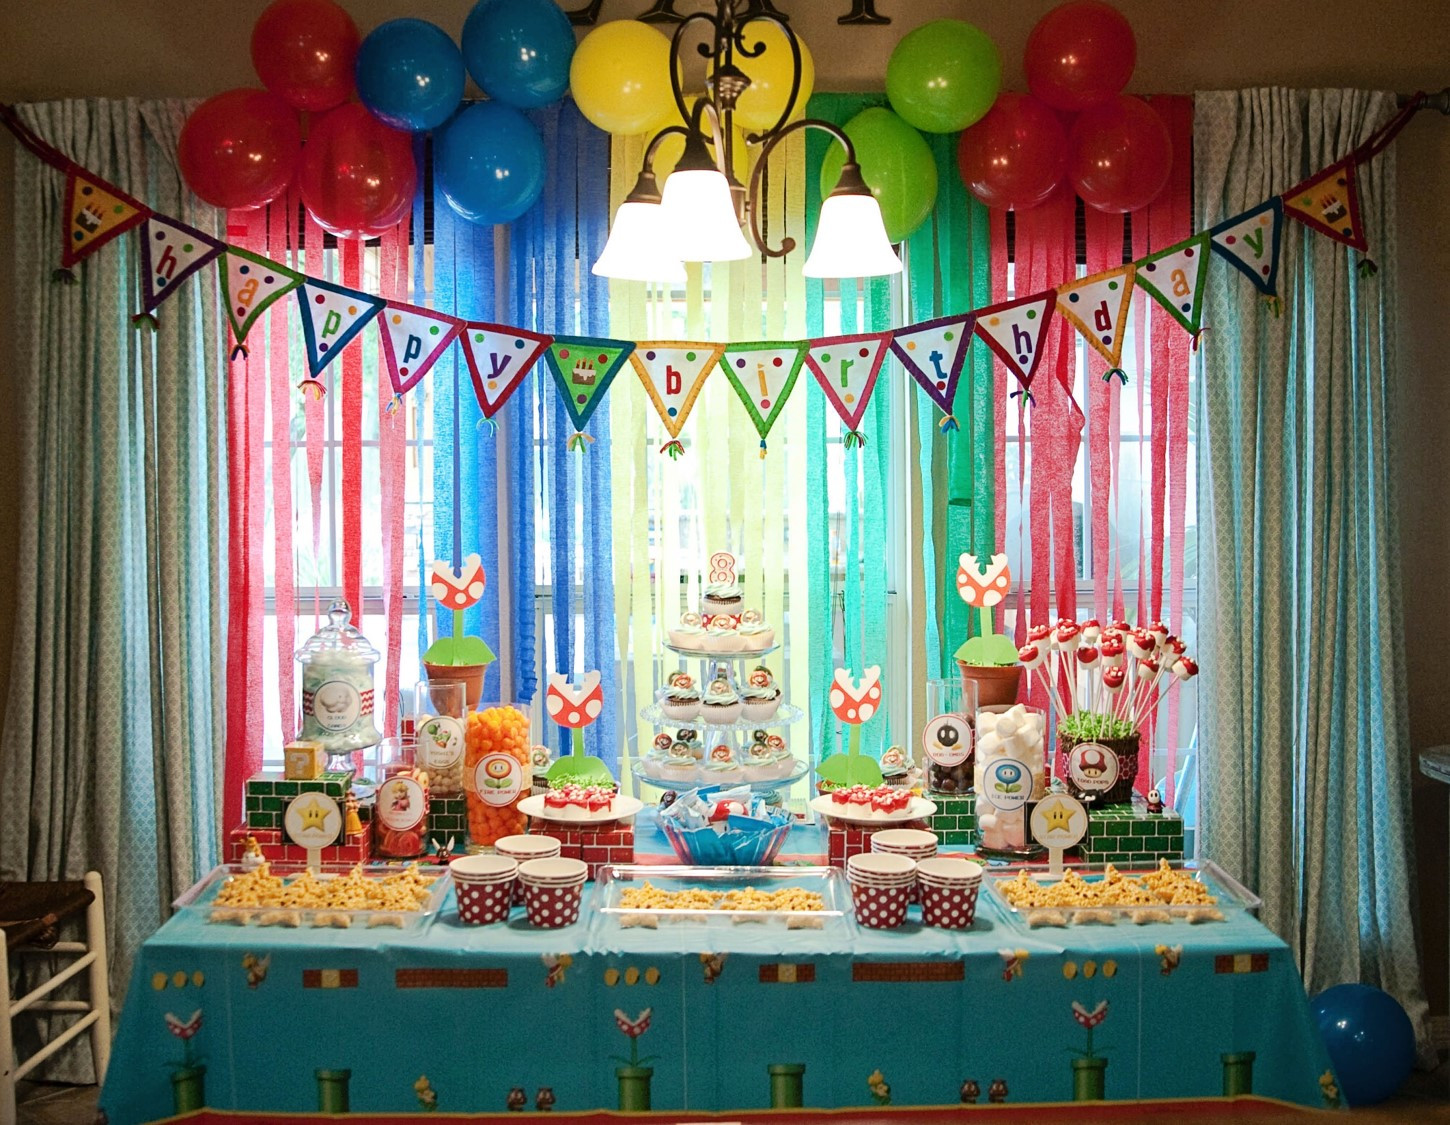 Mario Themed Birthday Party Ideas
 Pearls Handcuffs and Happy Hour Super Mario Bros